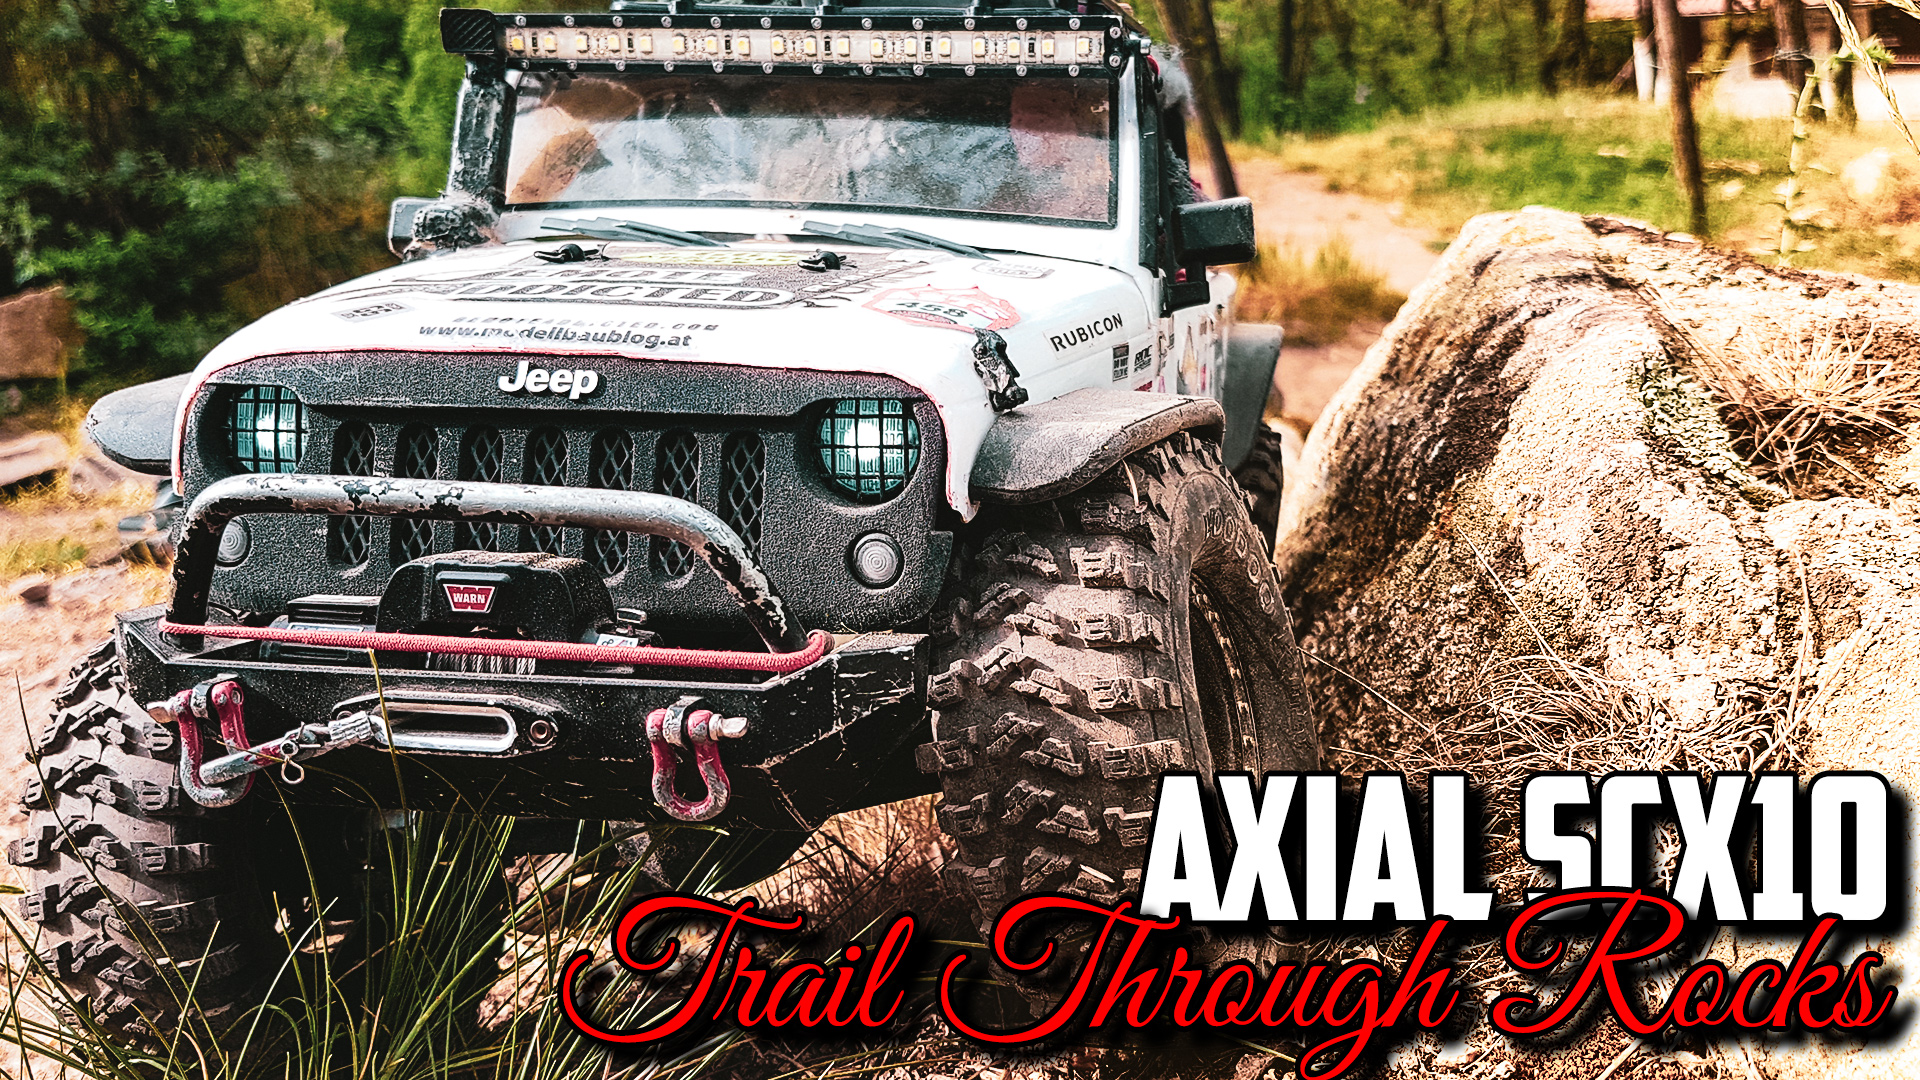 Axial Scx10 Jeep Wrangler CRC Edition